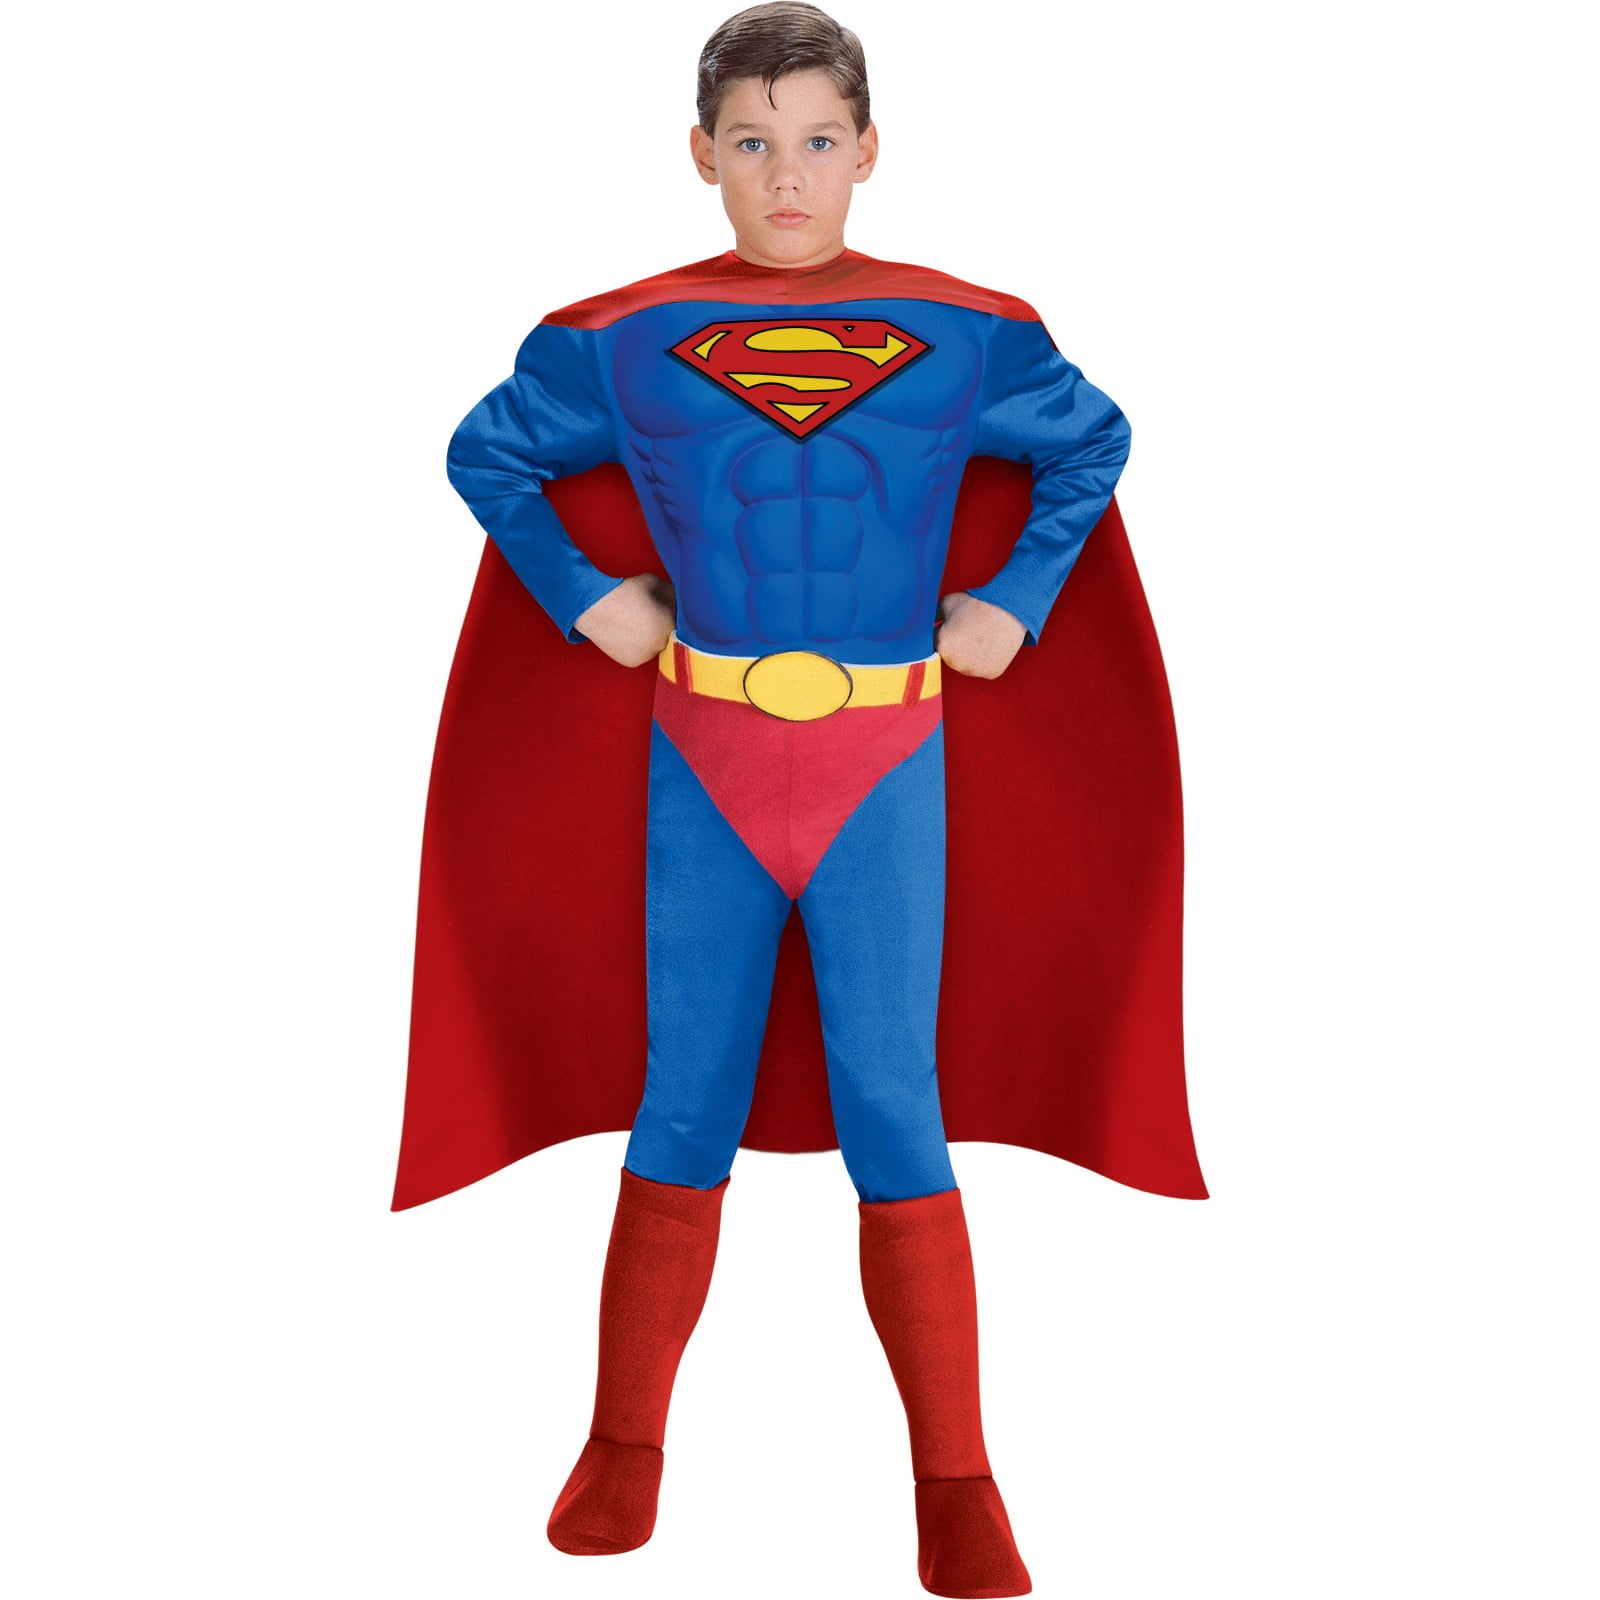 Deluxe Muscle Chest Superman Child Costume - Walmart.com